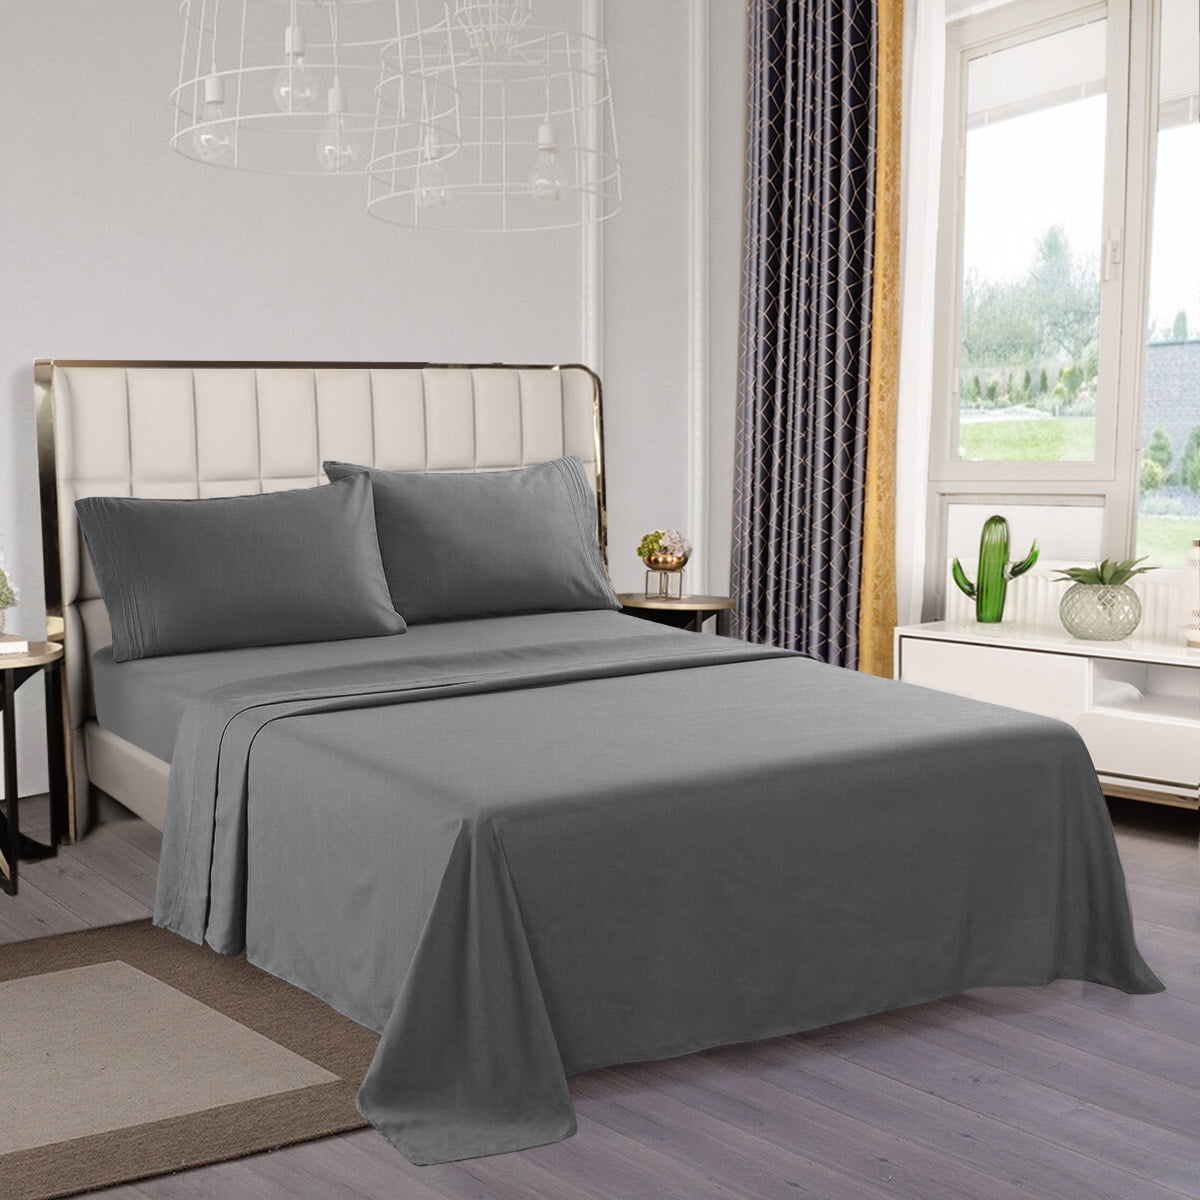 Bed Sheets King Size Wonwo Luxury, Dark Grey Bed Sheets Super King